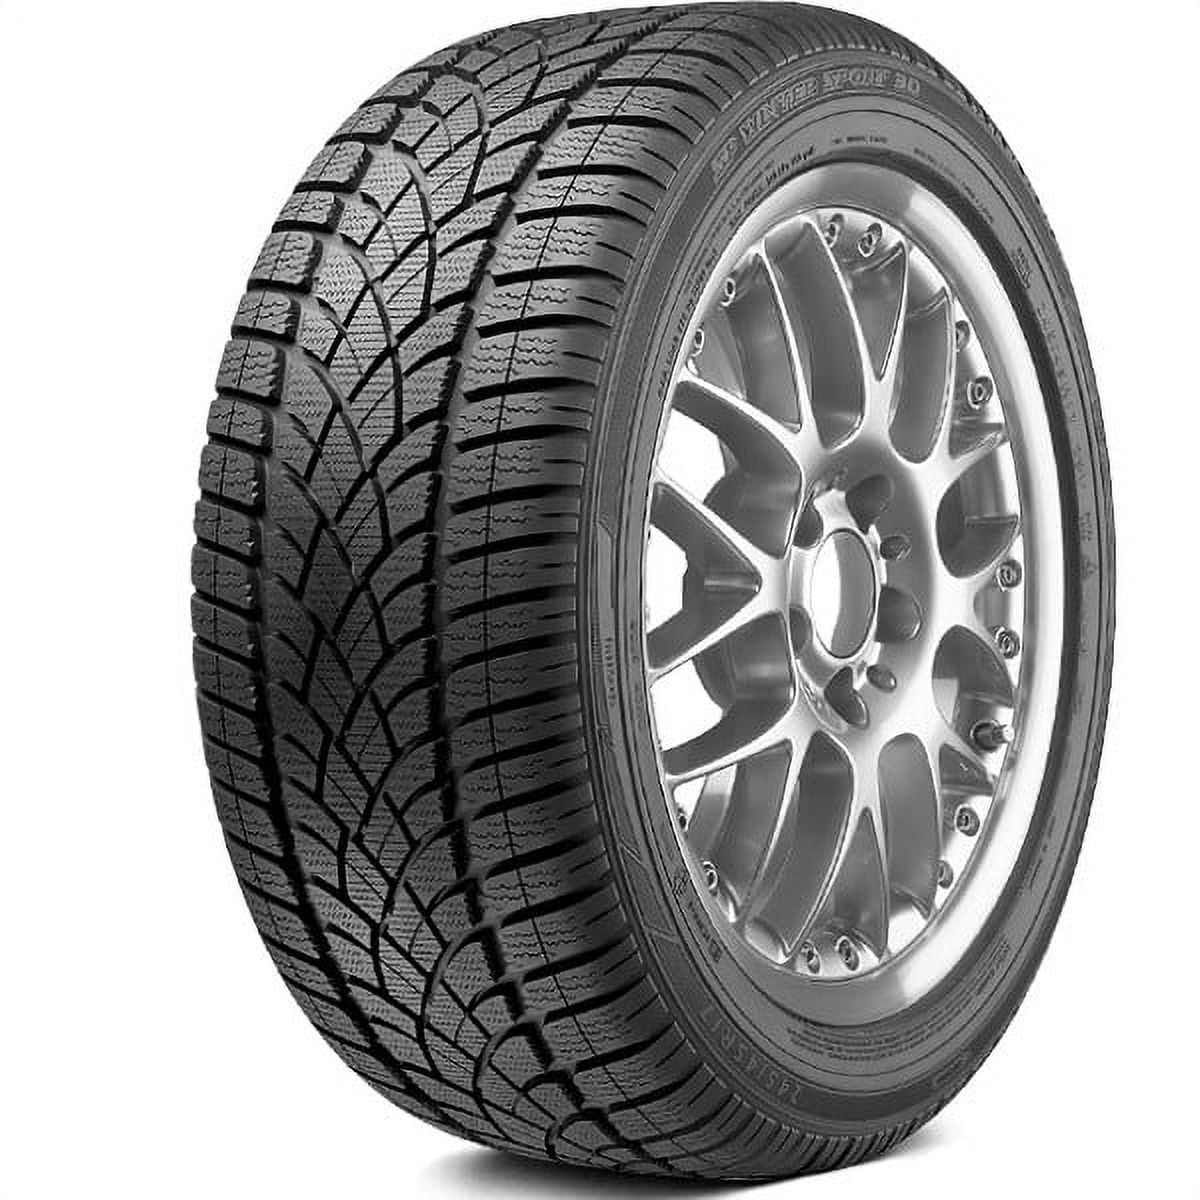 Dunlop SP Winter Sport 3D 235/40R19 96V XL (Studless) Snow Tire Fits:  2014-20 Ford Fusion Titanium, 2018 Honda Accord EX-L